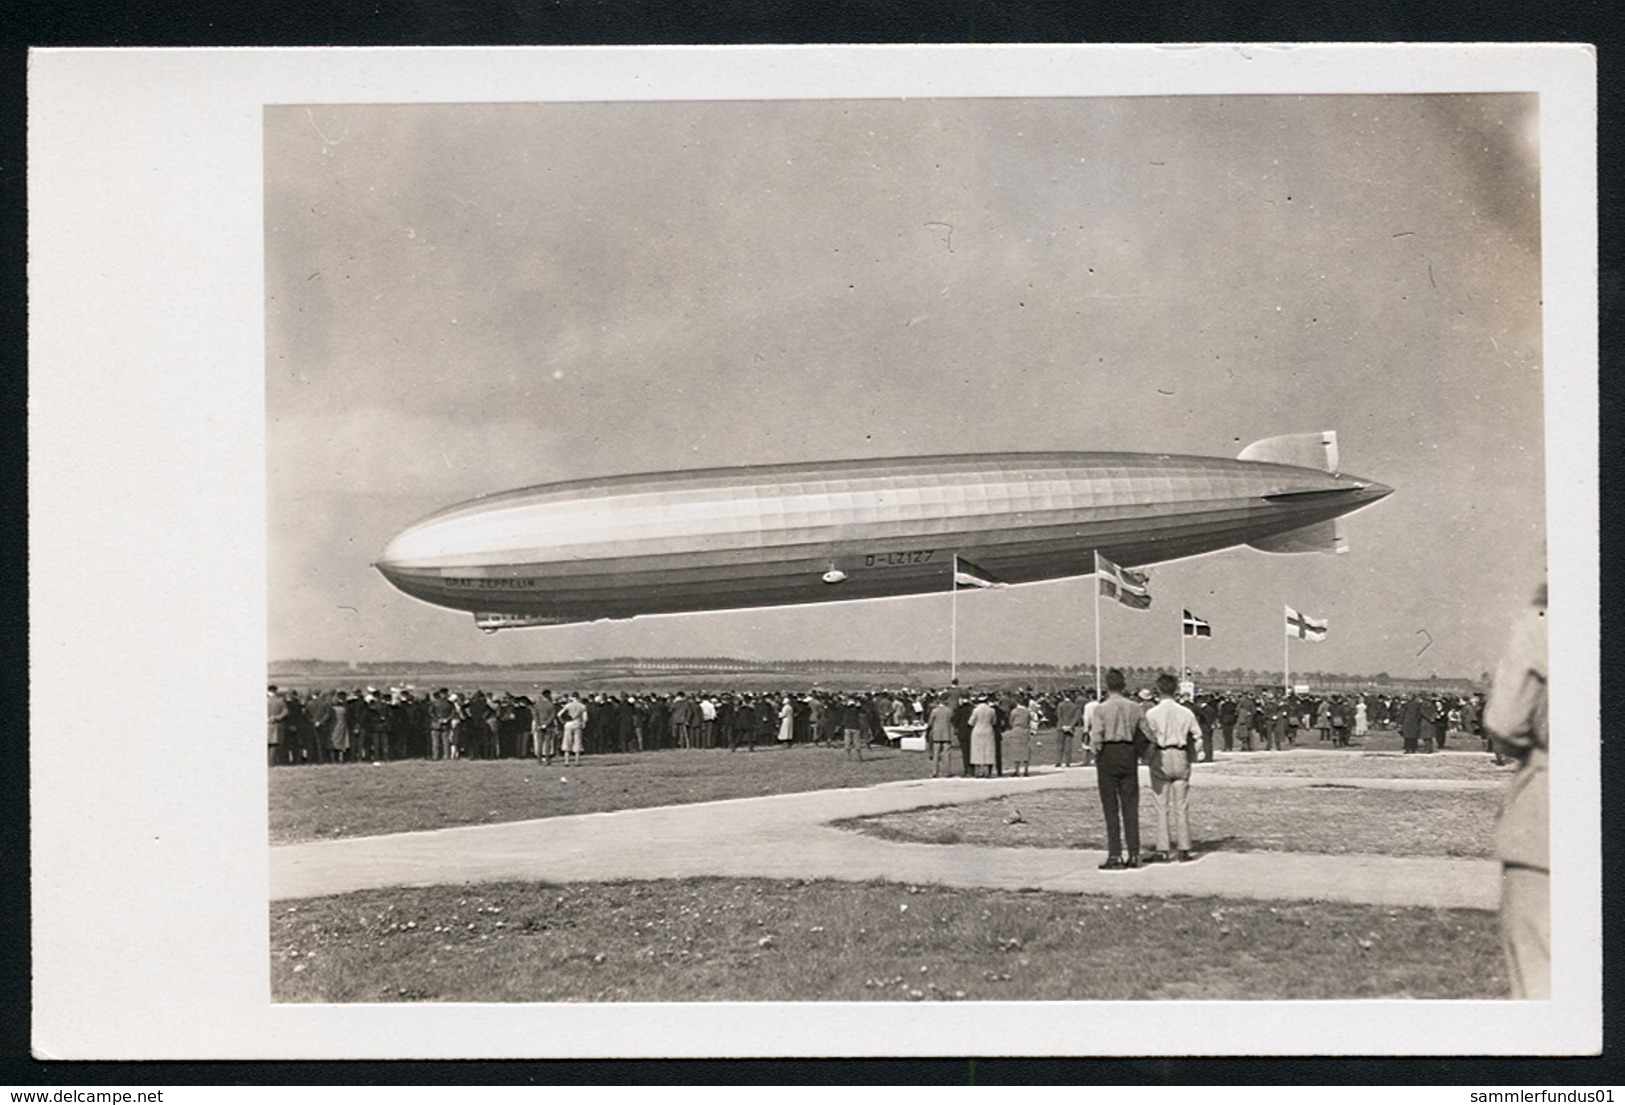 Foto AK/CP  Graf Zeppelin Luftschiff  LZ 127  Landung   Ungel/uncirc.1930er  Erhaltung/Cond. 2  Nr. 00625 - Aeronaves